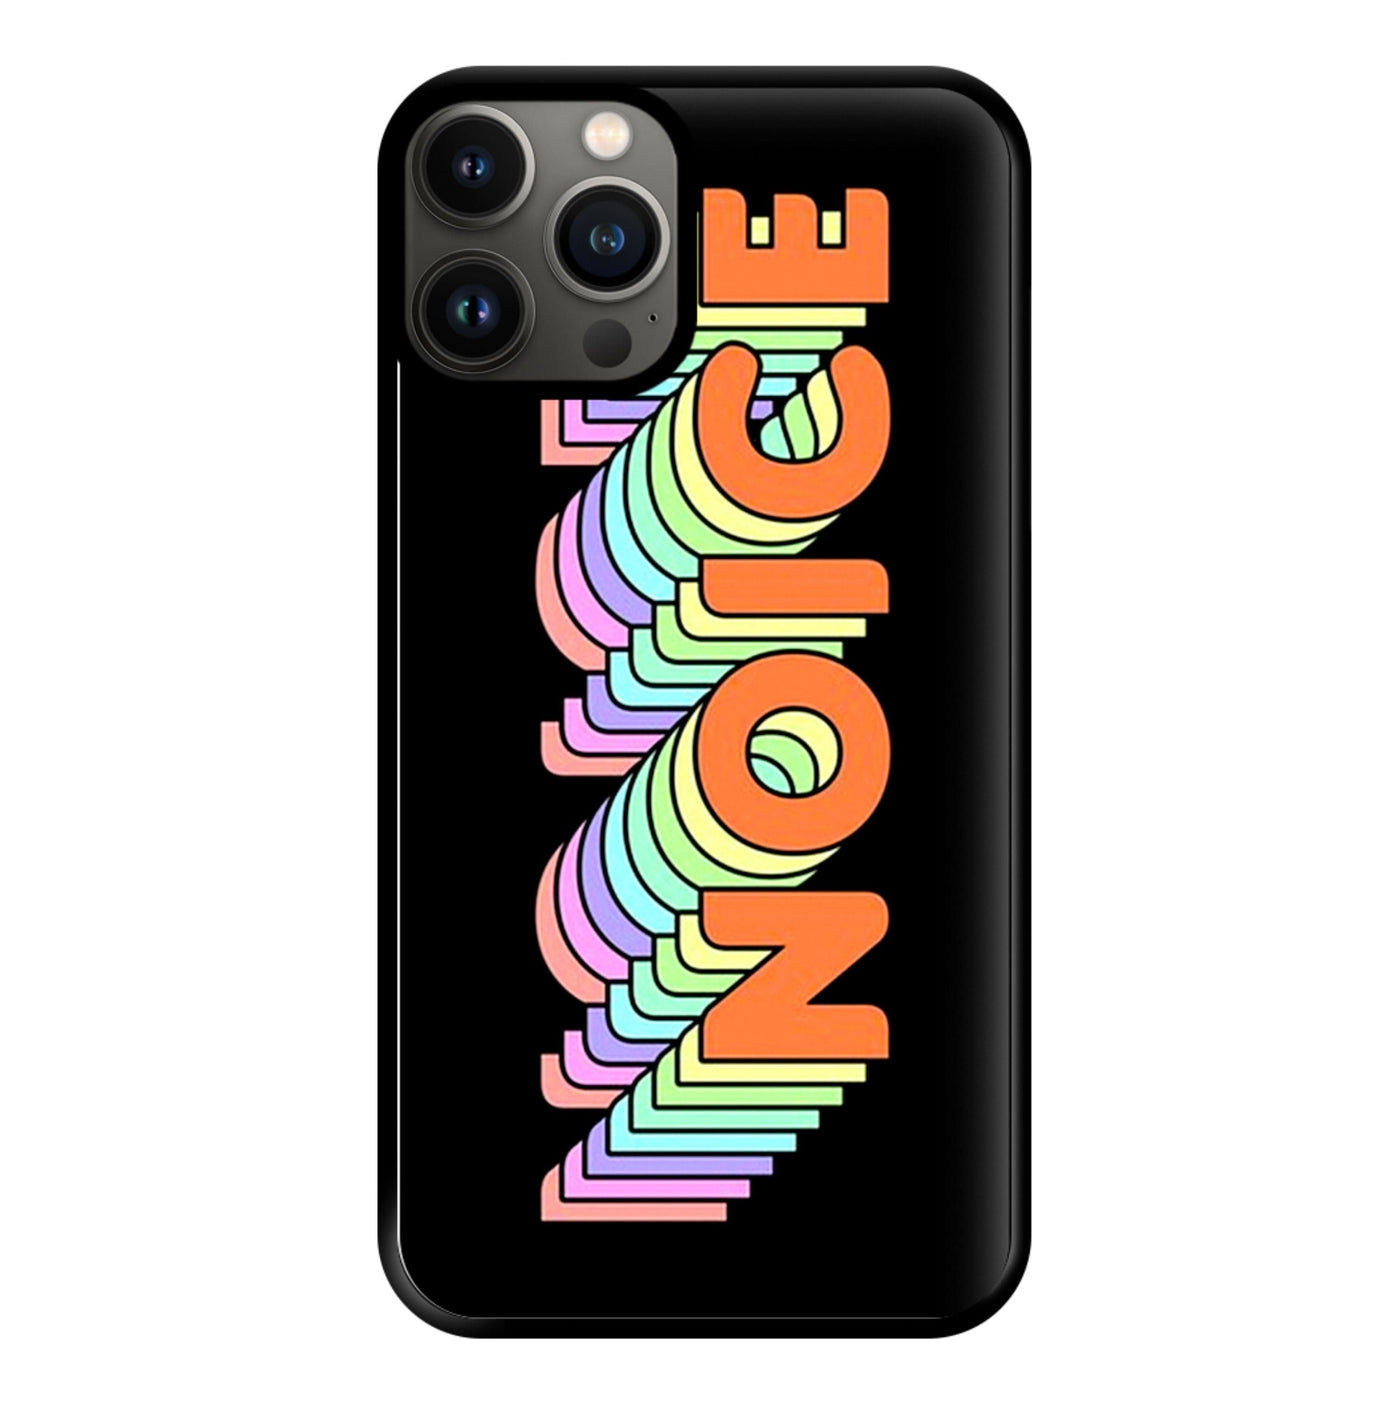 Noice - Brooklyn Nine-Nine Phone Case